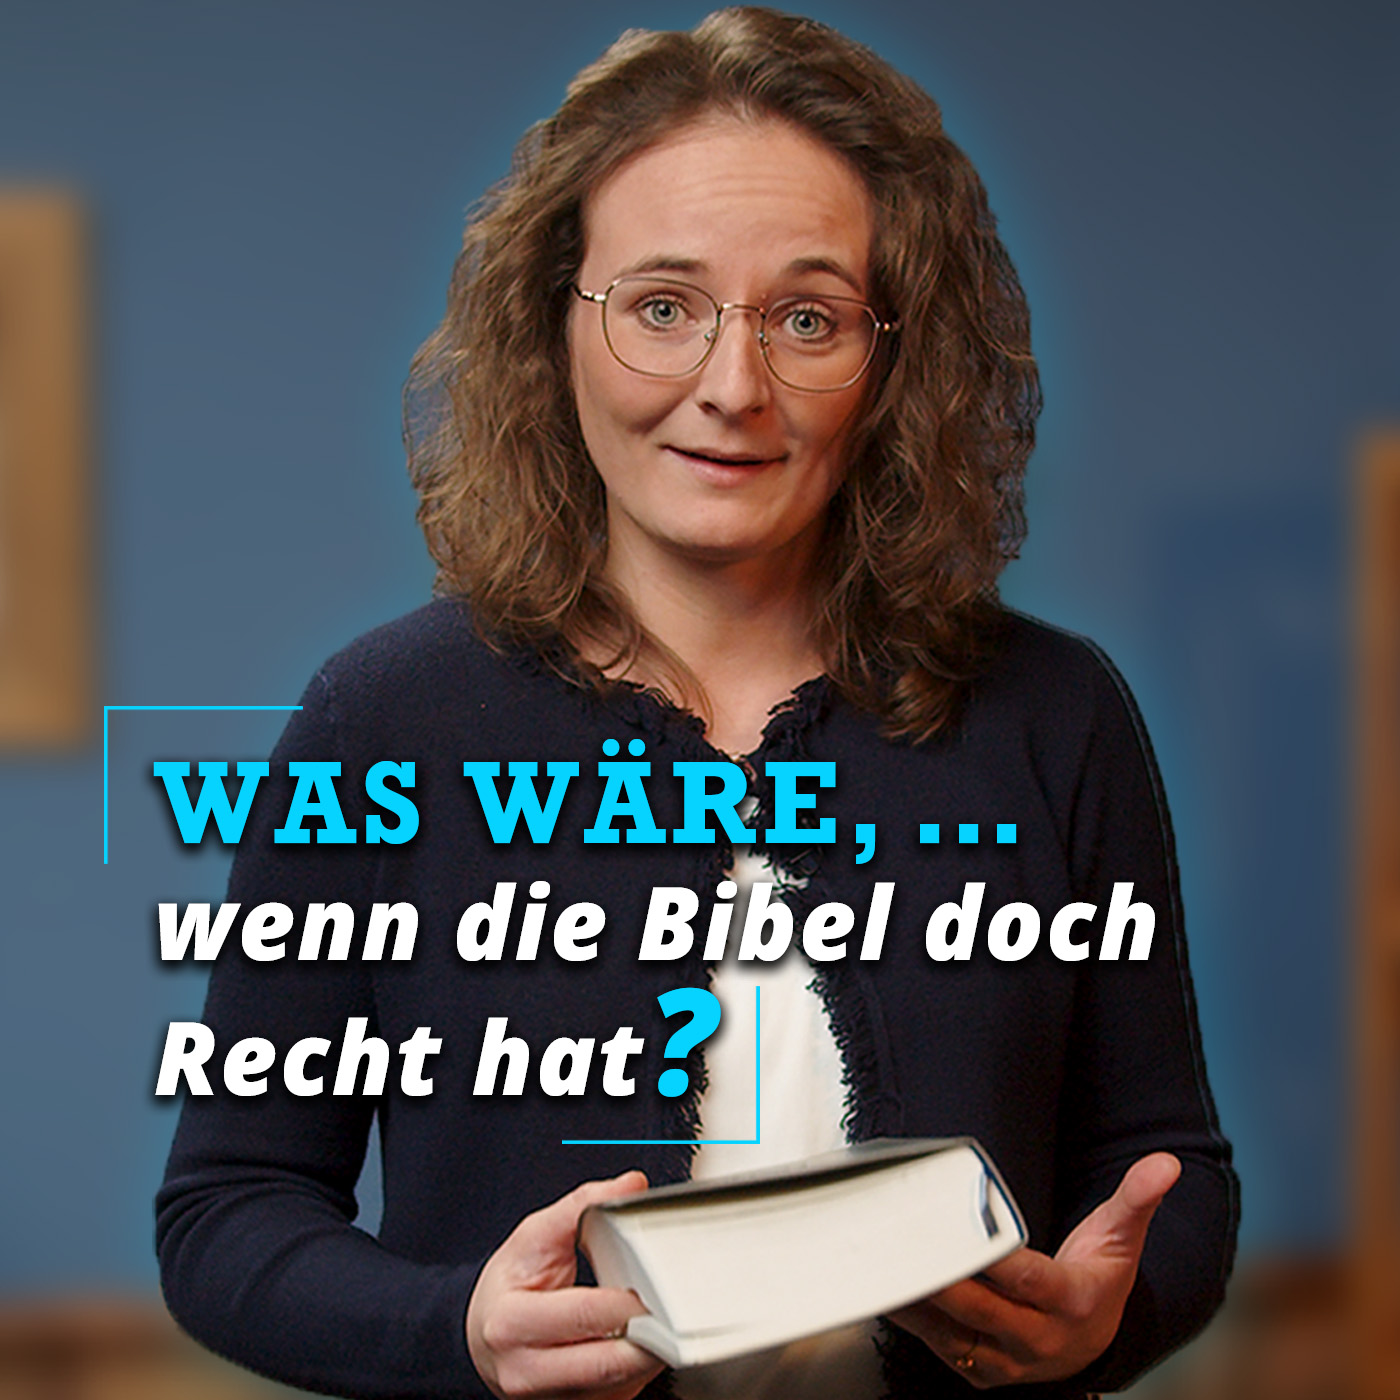 Was wäre, wenn die Bibel doch Recht hat?